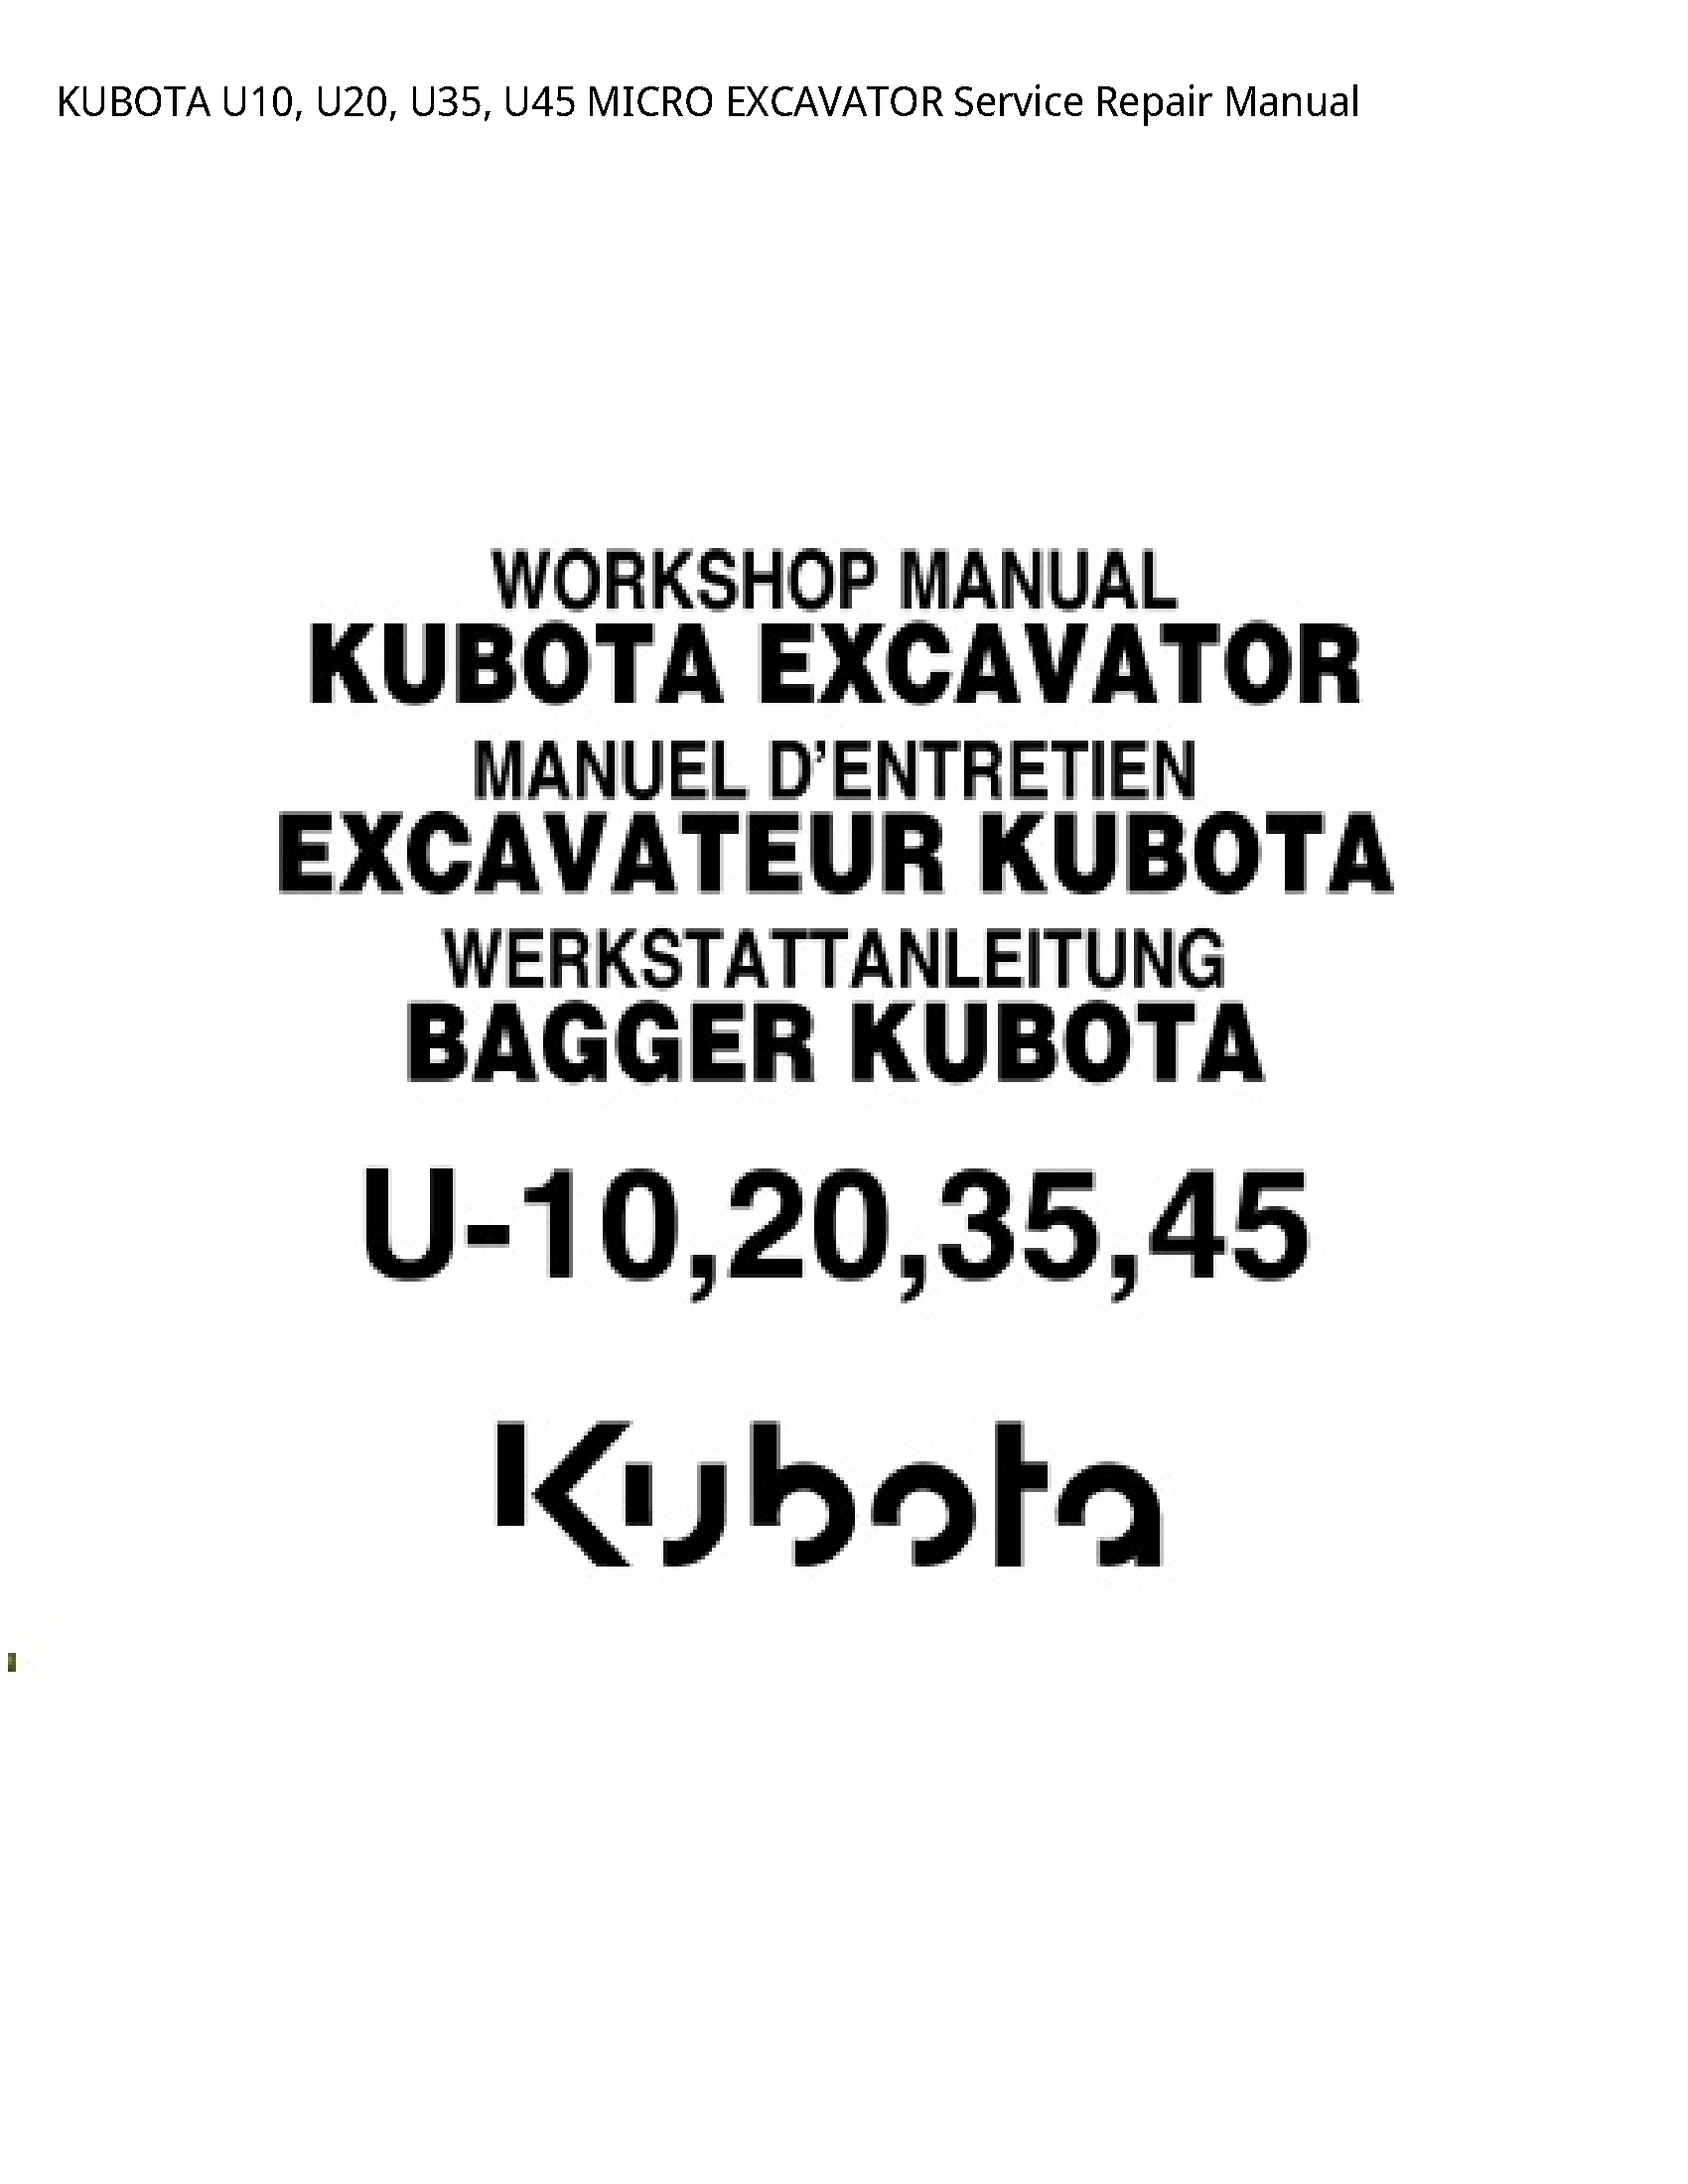 Kubota U10 MICRO EXCAVATOR manual